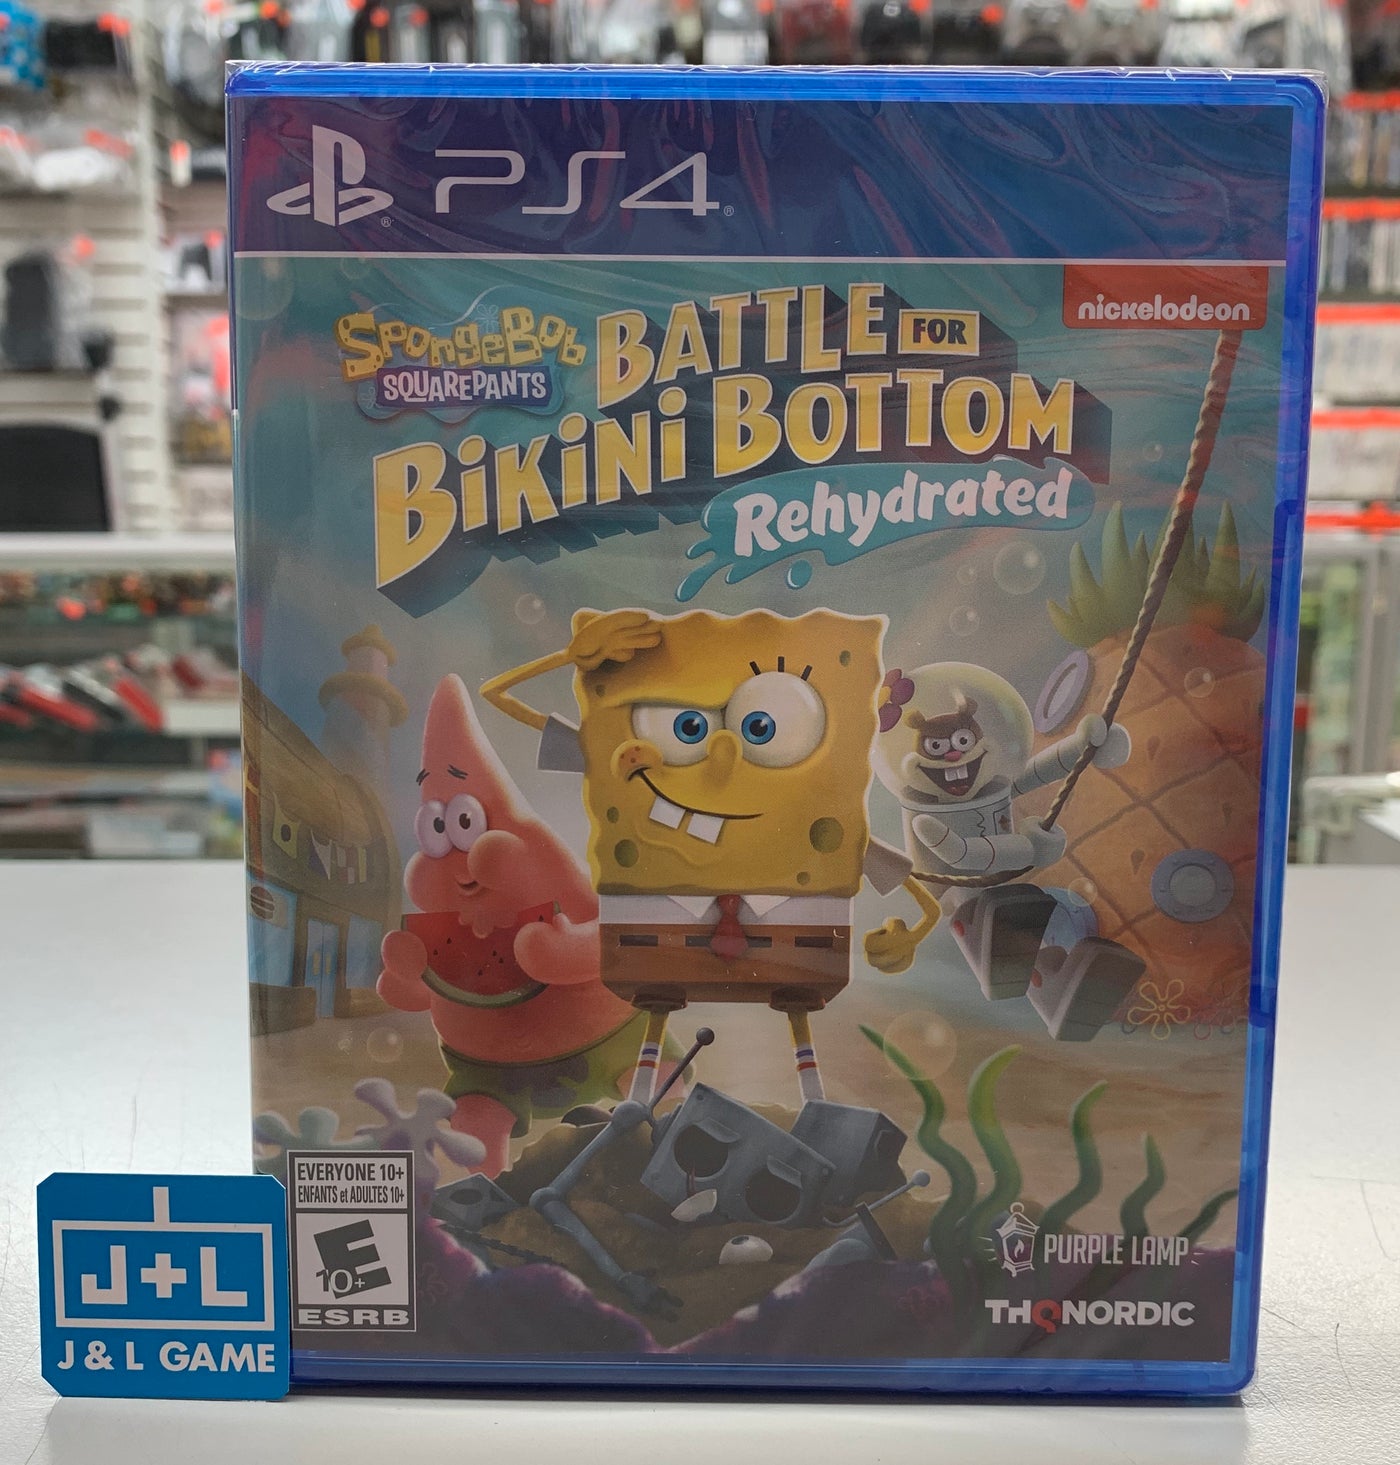 Game PlaySta J&L | - Bottom Battle Rehydrated Bikini Squarepants: - for Spongebob